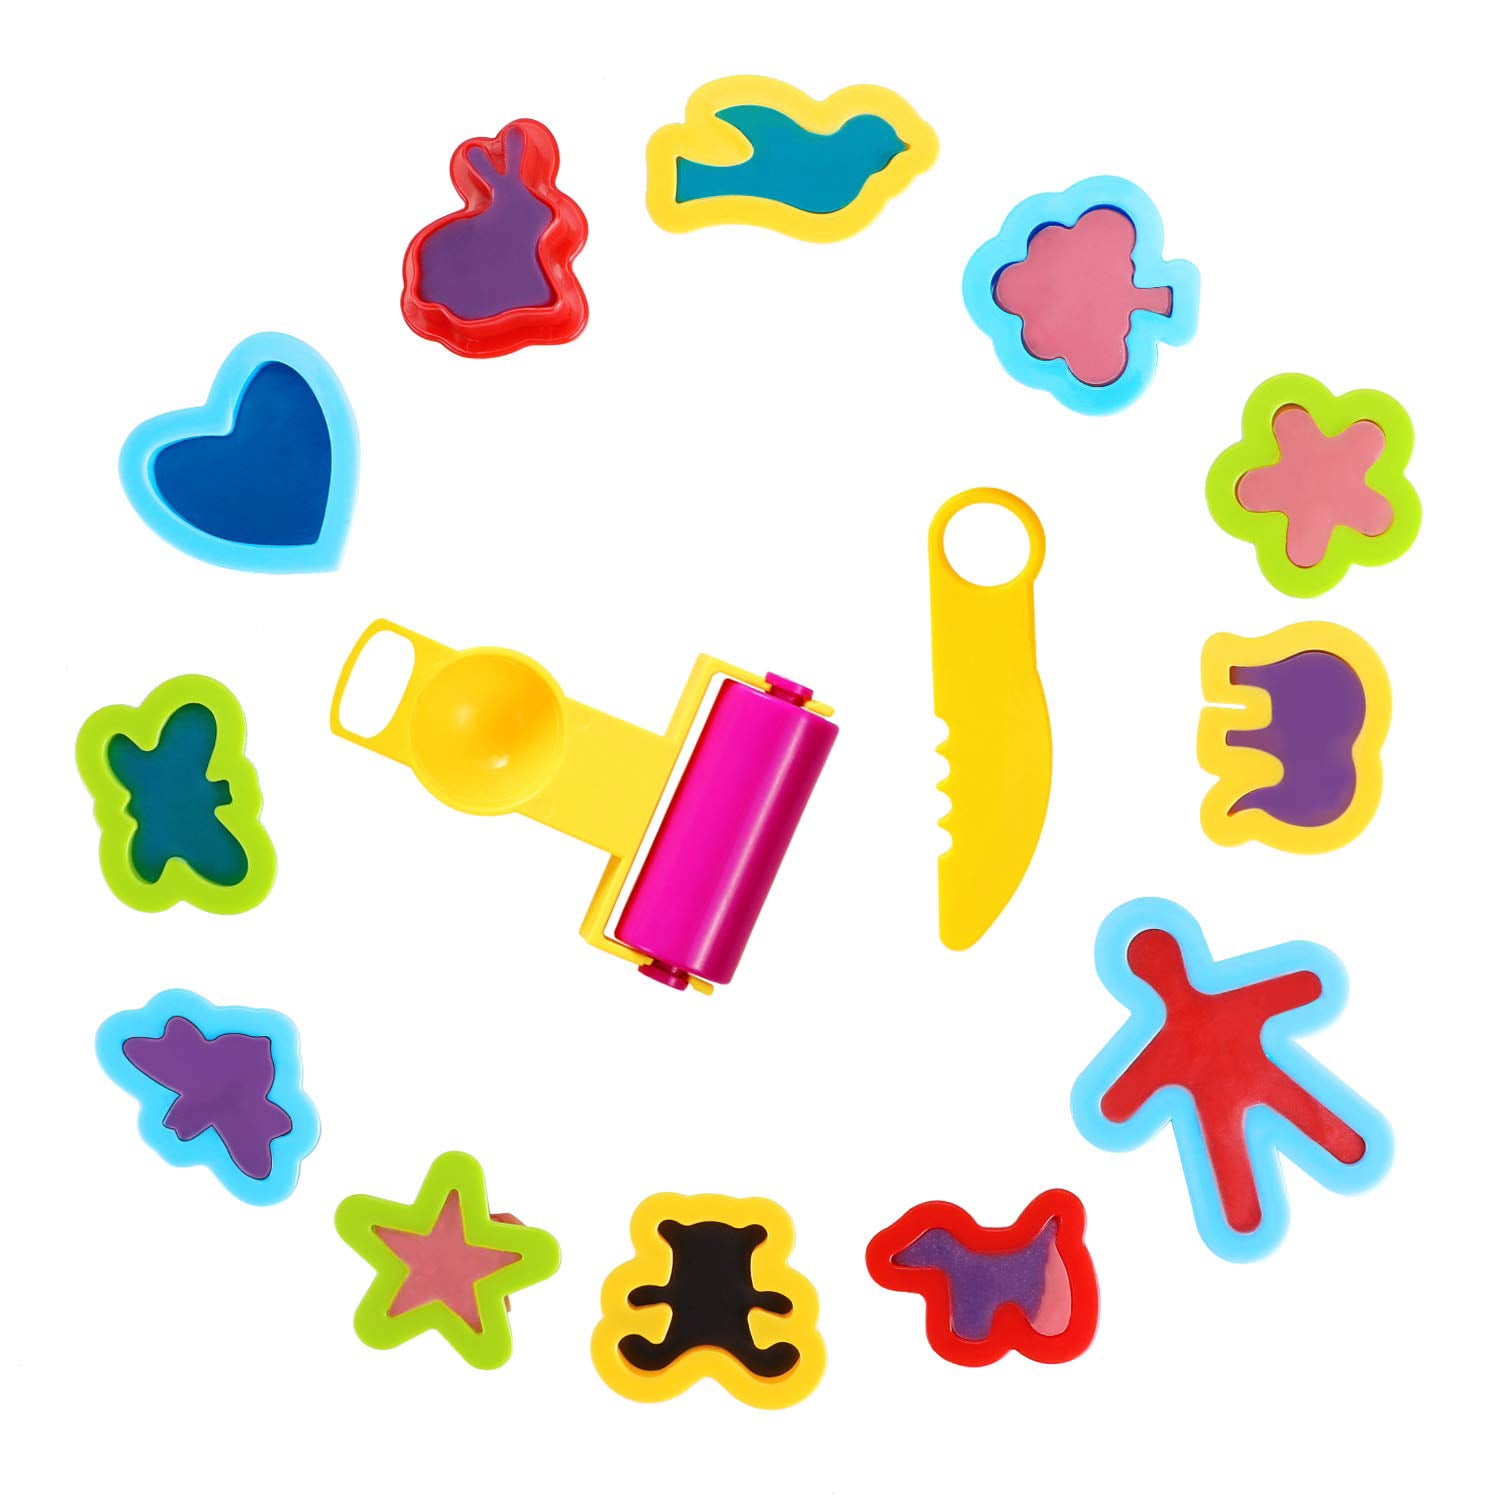 Levamdar Play Dough Tools Kit, 20pcs, Playdough Toys, Playdough Sets for Kids, Playdough Accessories, Molds for Play Dough